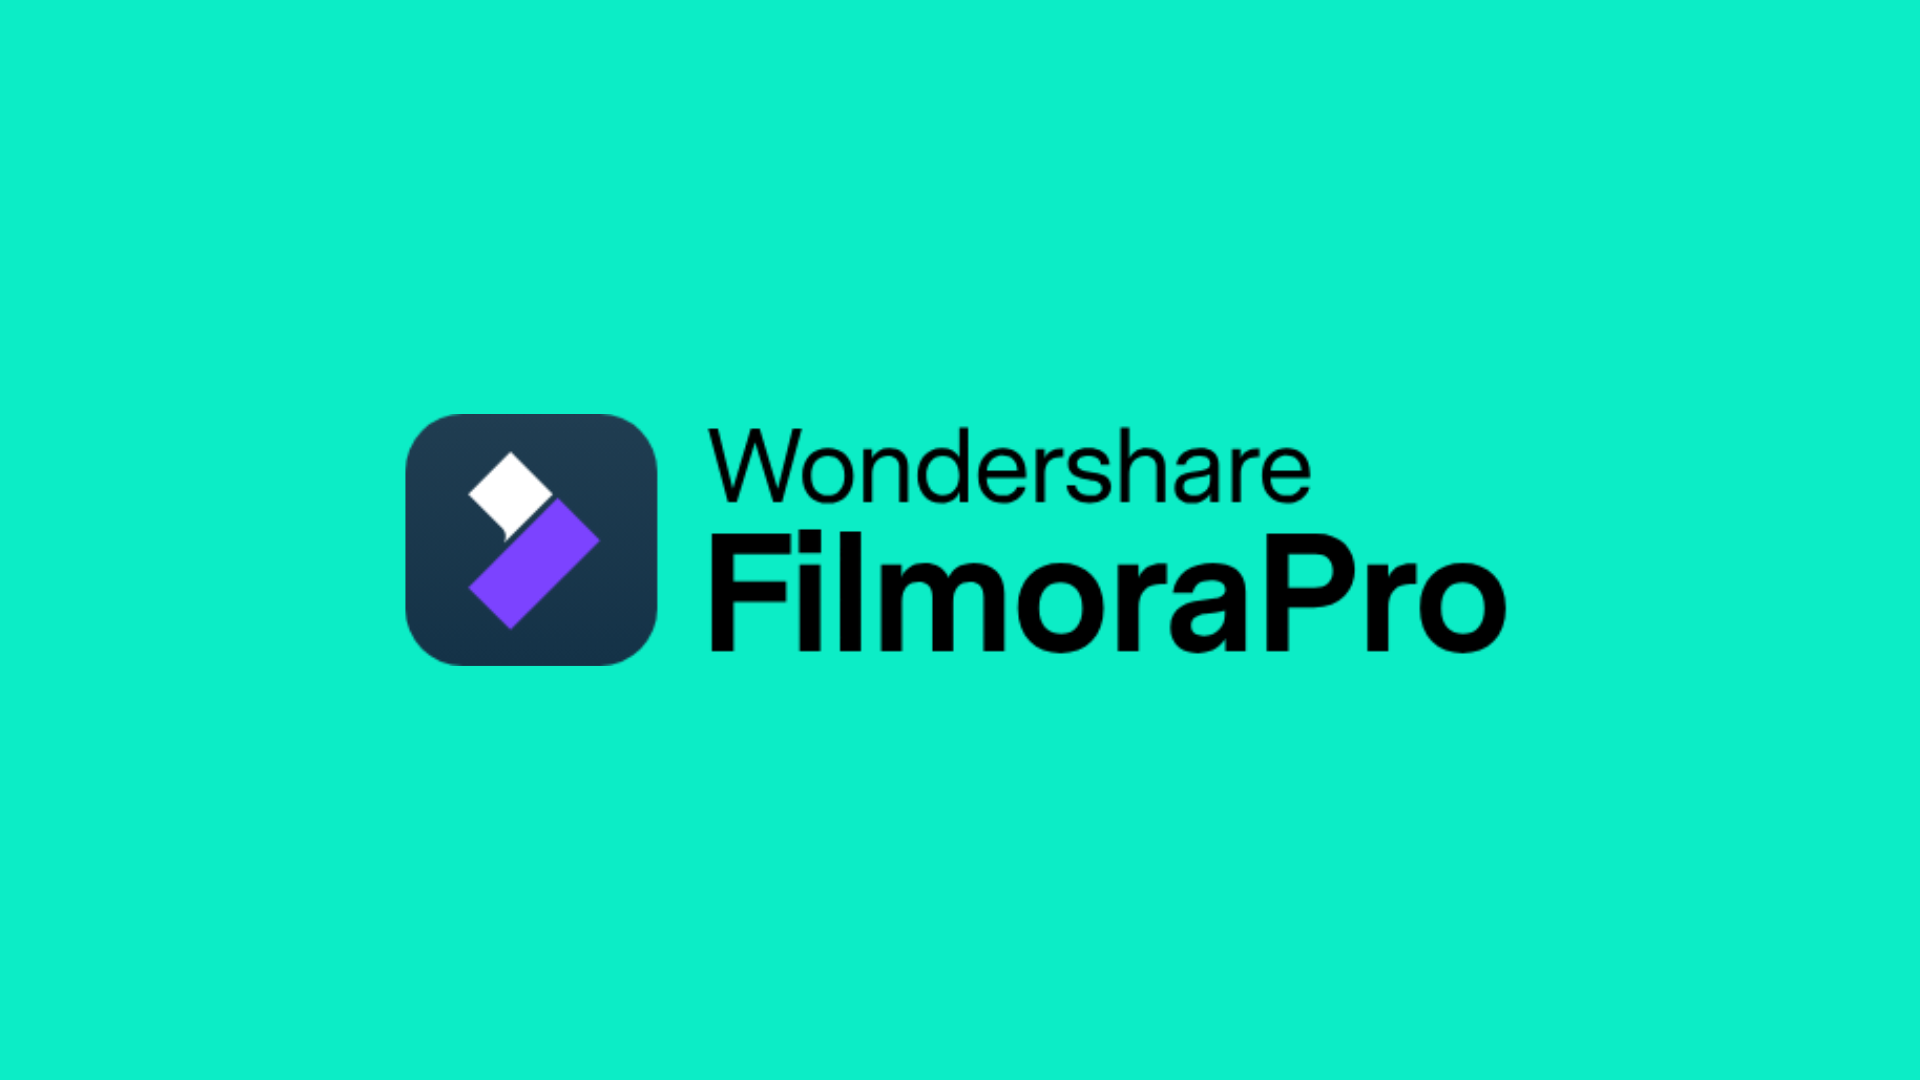 filmora pro whiteboard animation software